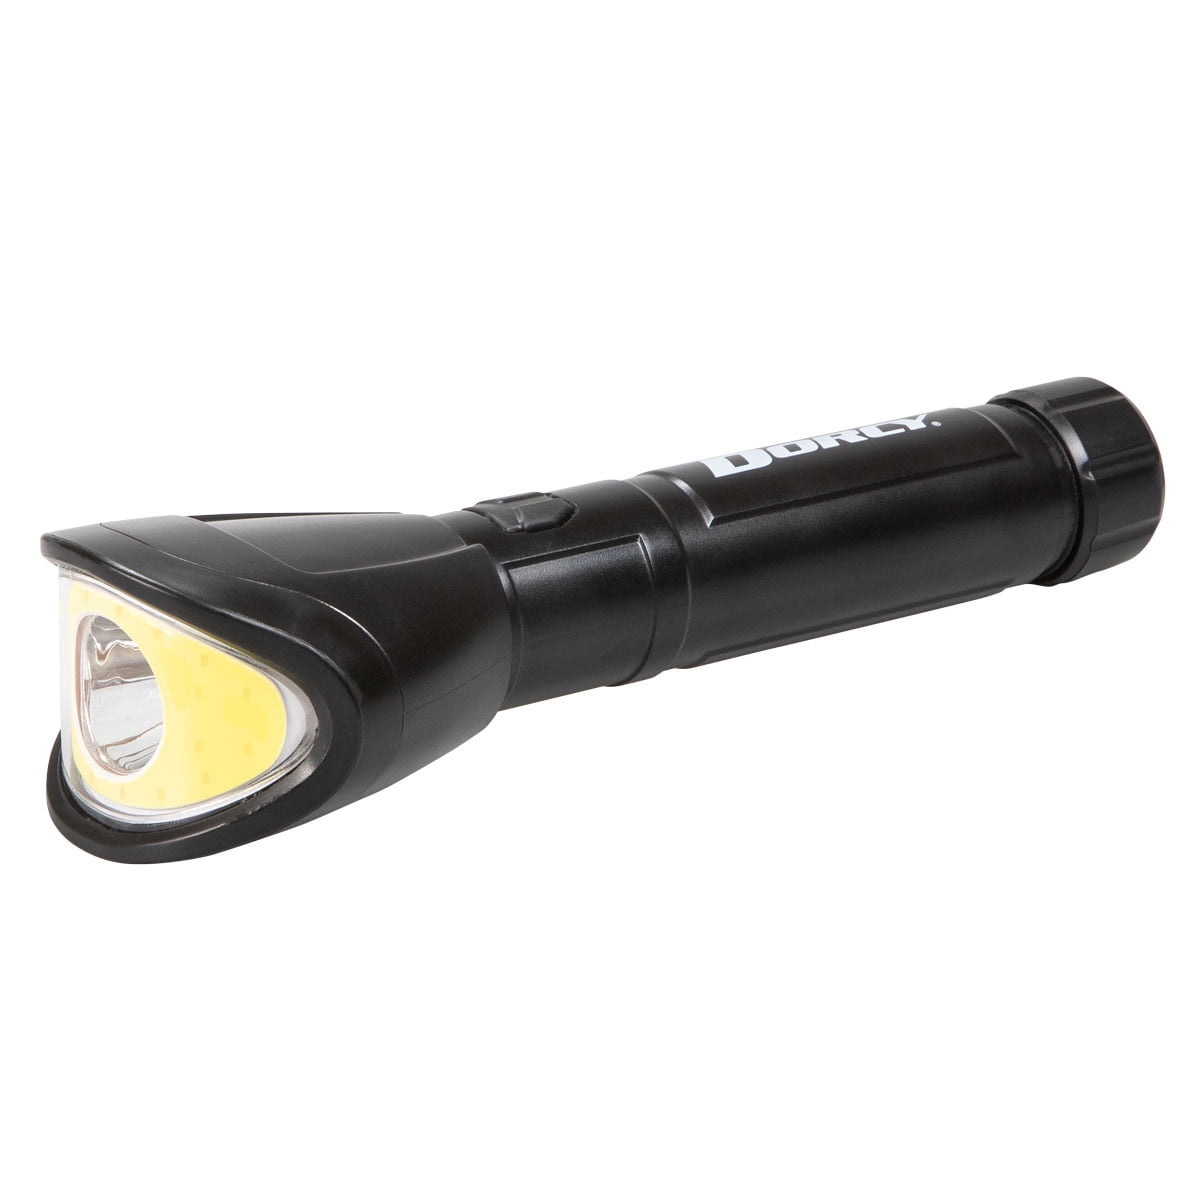 Dorcy® Pro Series 450 Lumens Wide Beam LED Flashlight Box